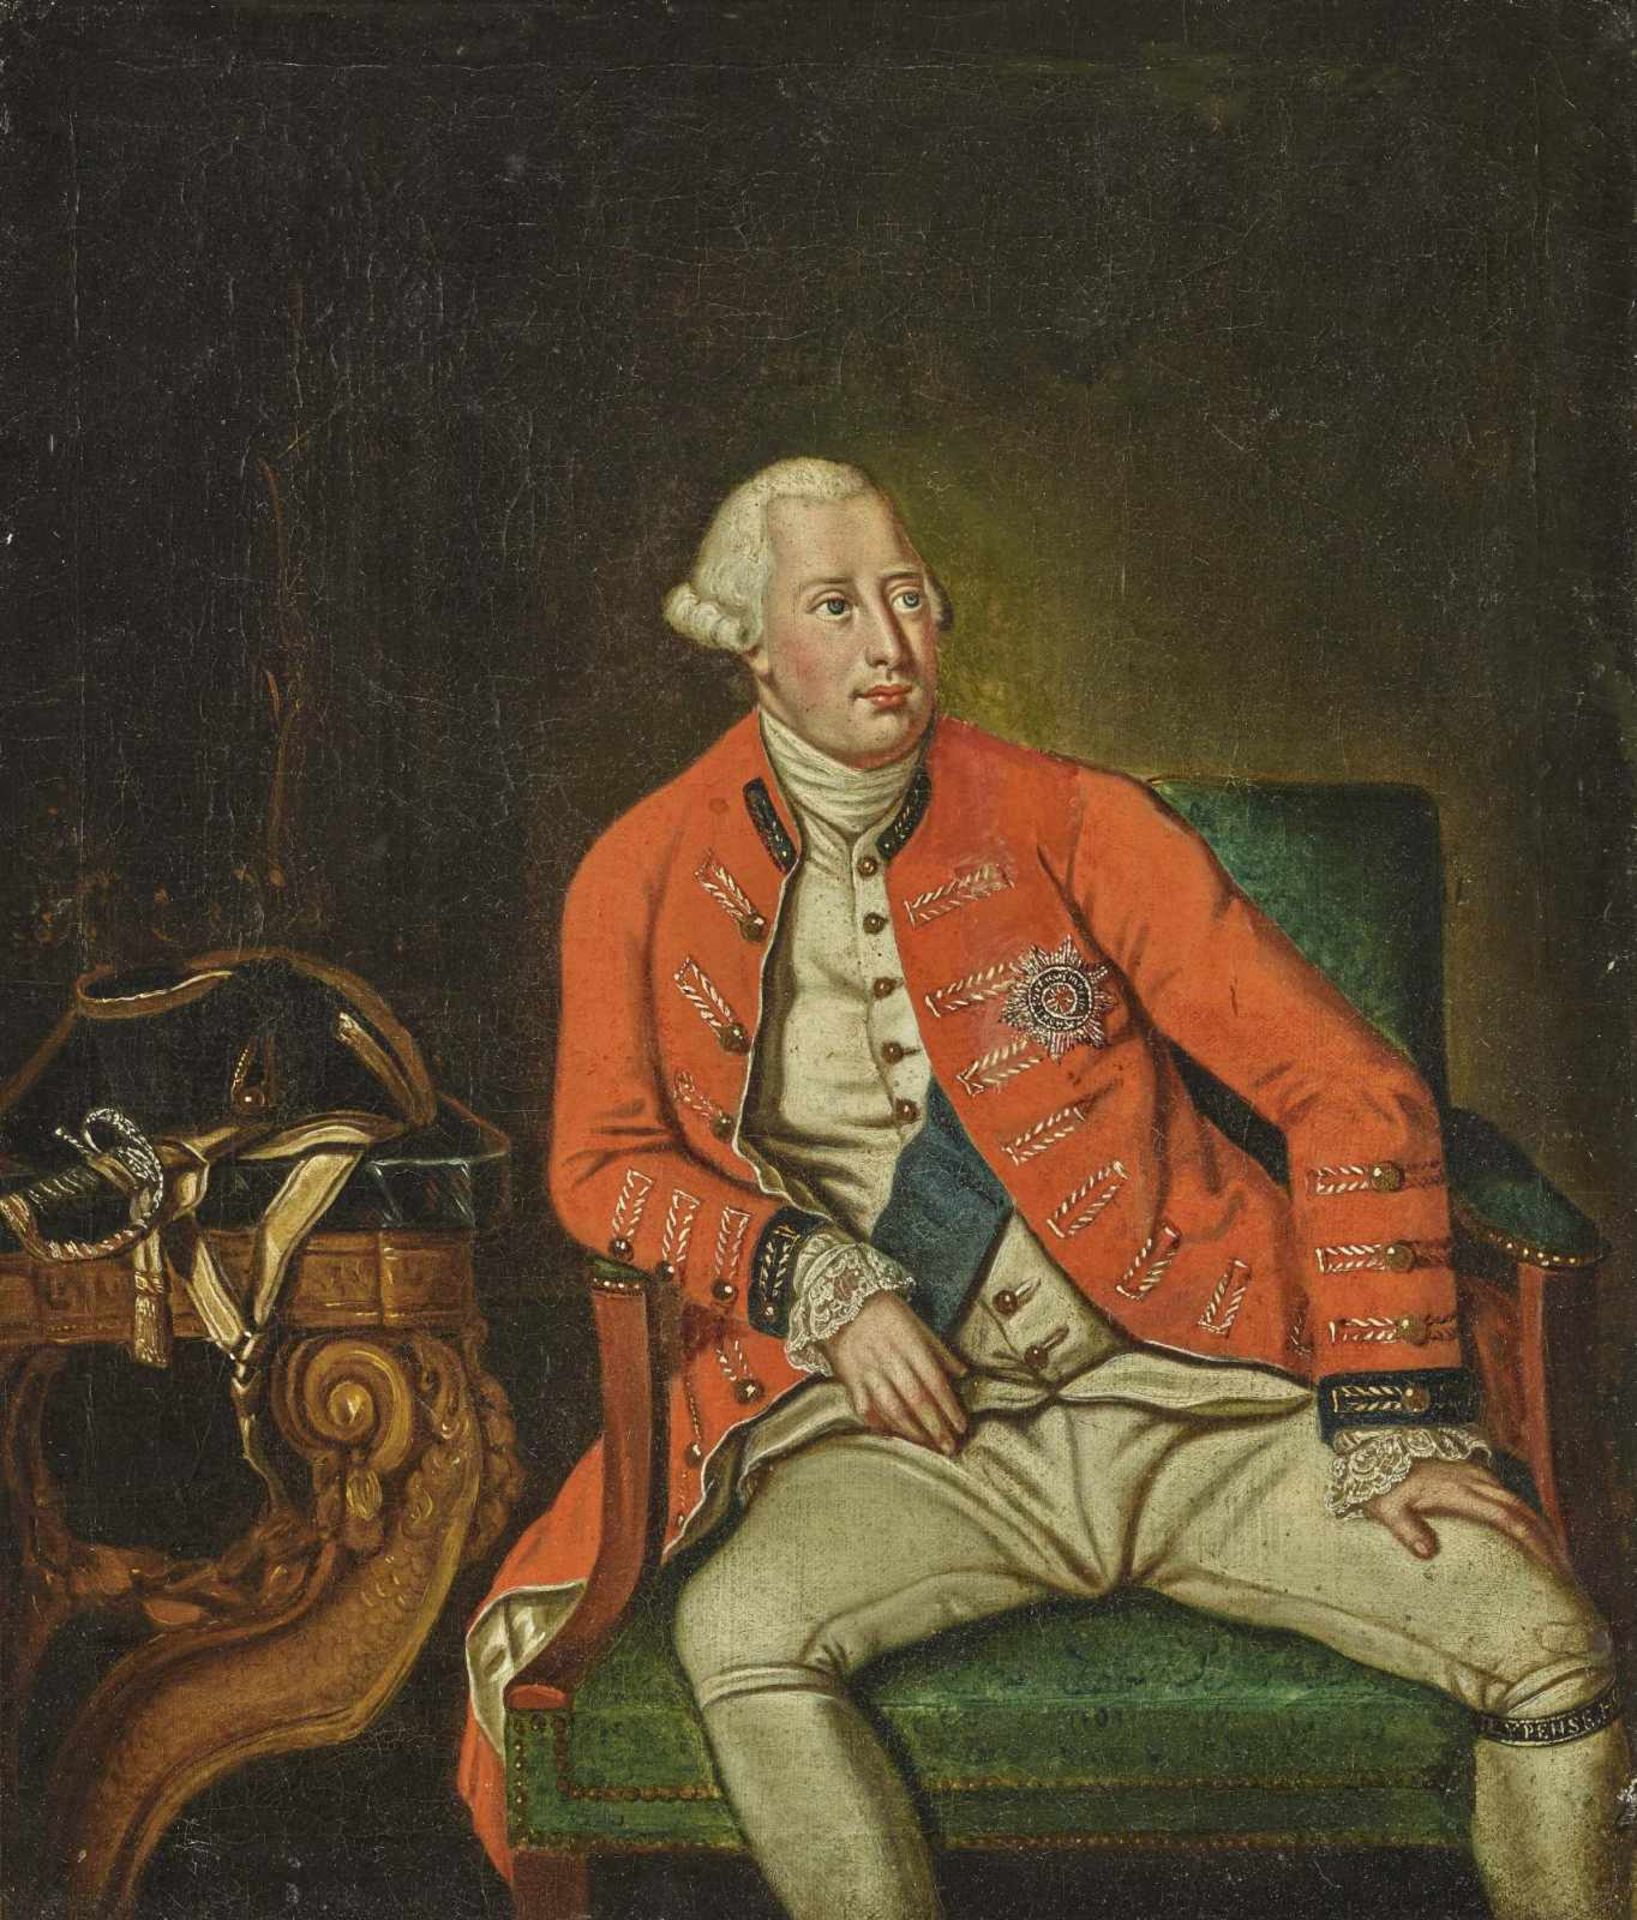 ENGLAND Ende 18. Jh. Porträt George III ÖL auf Lwd. 48 x 40 cm. Doubliert. Rest. Rahmen.